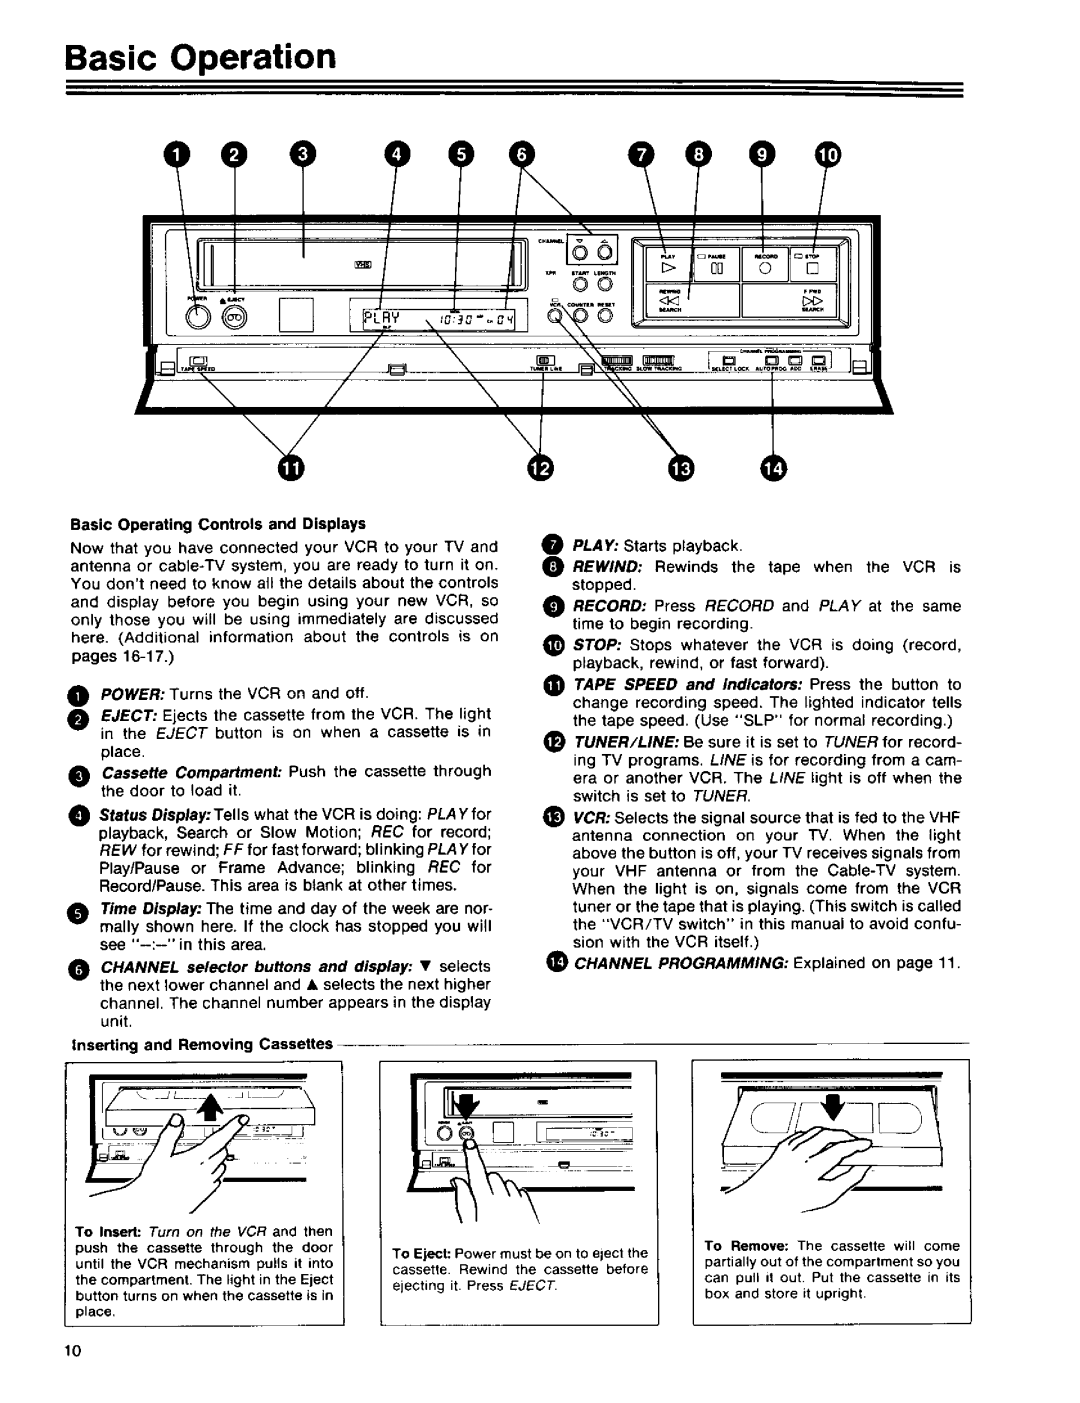 RCA 390 owner manual Basic Operation 